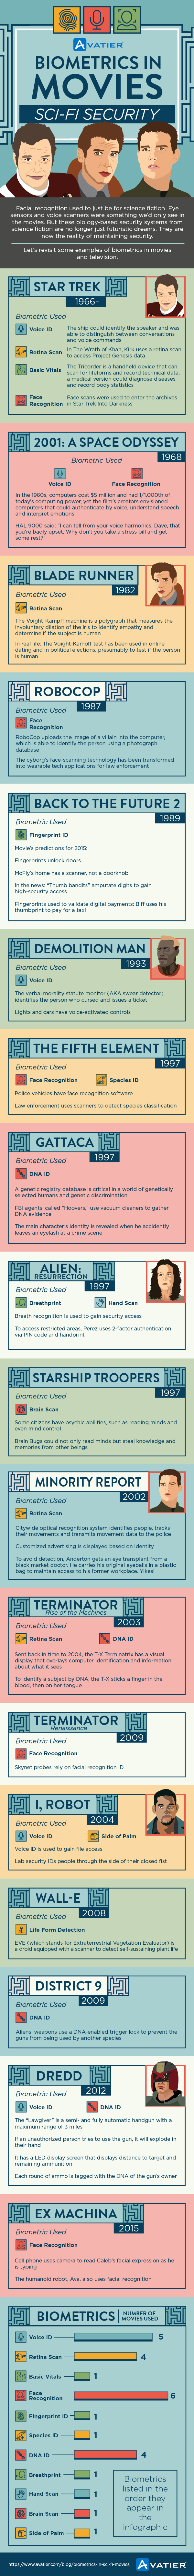 biometrics in sci-fi movies